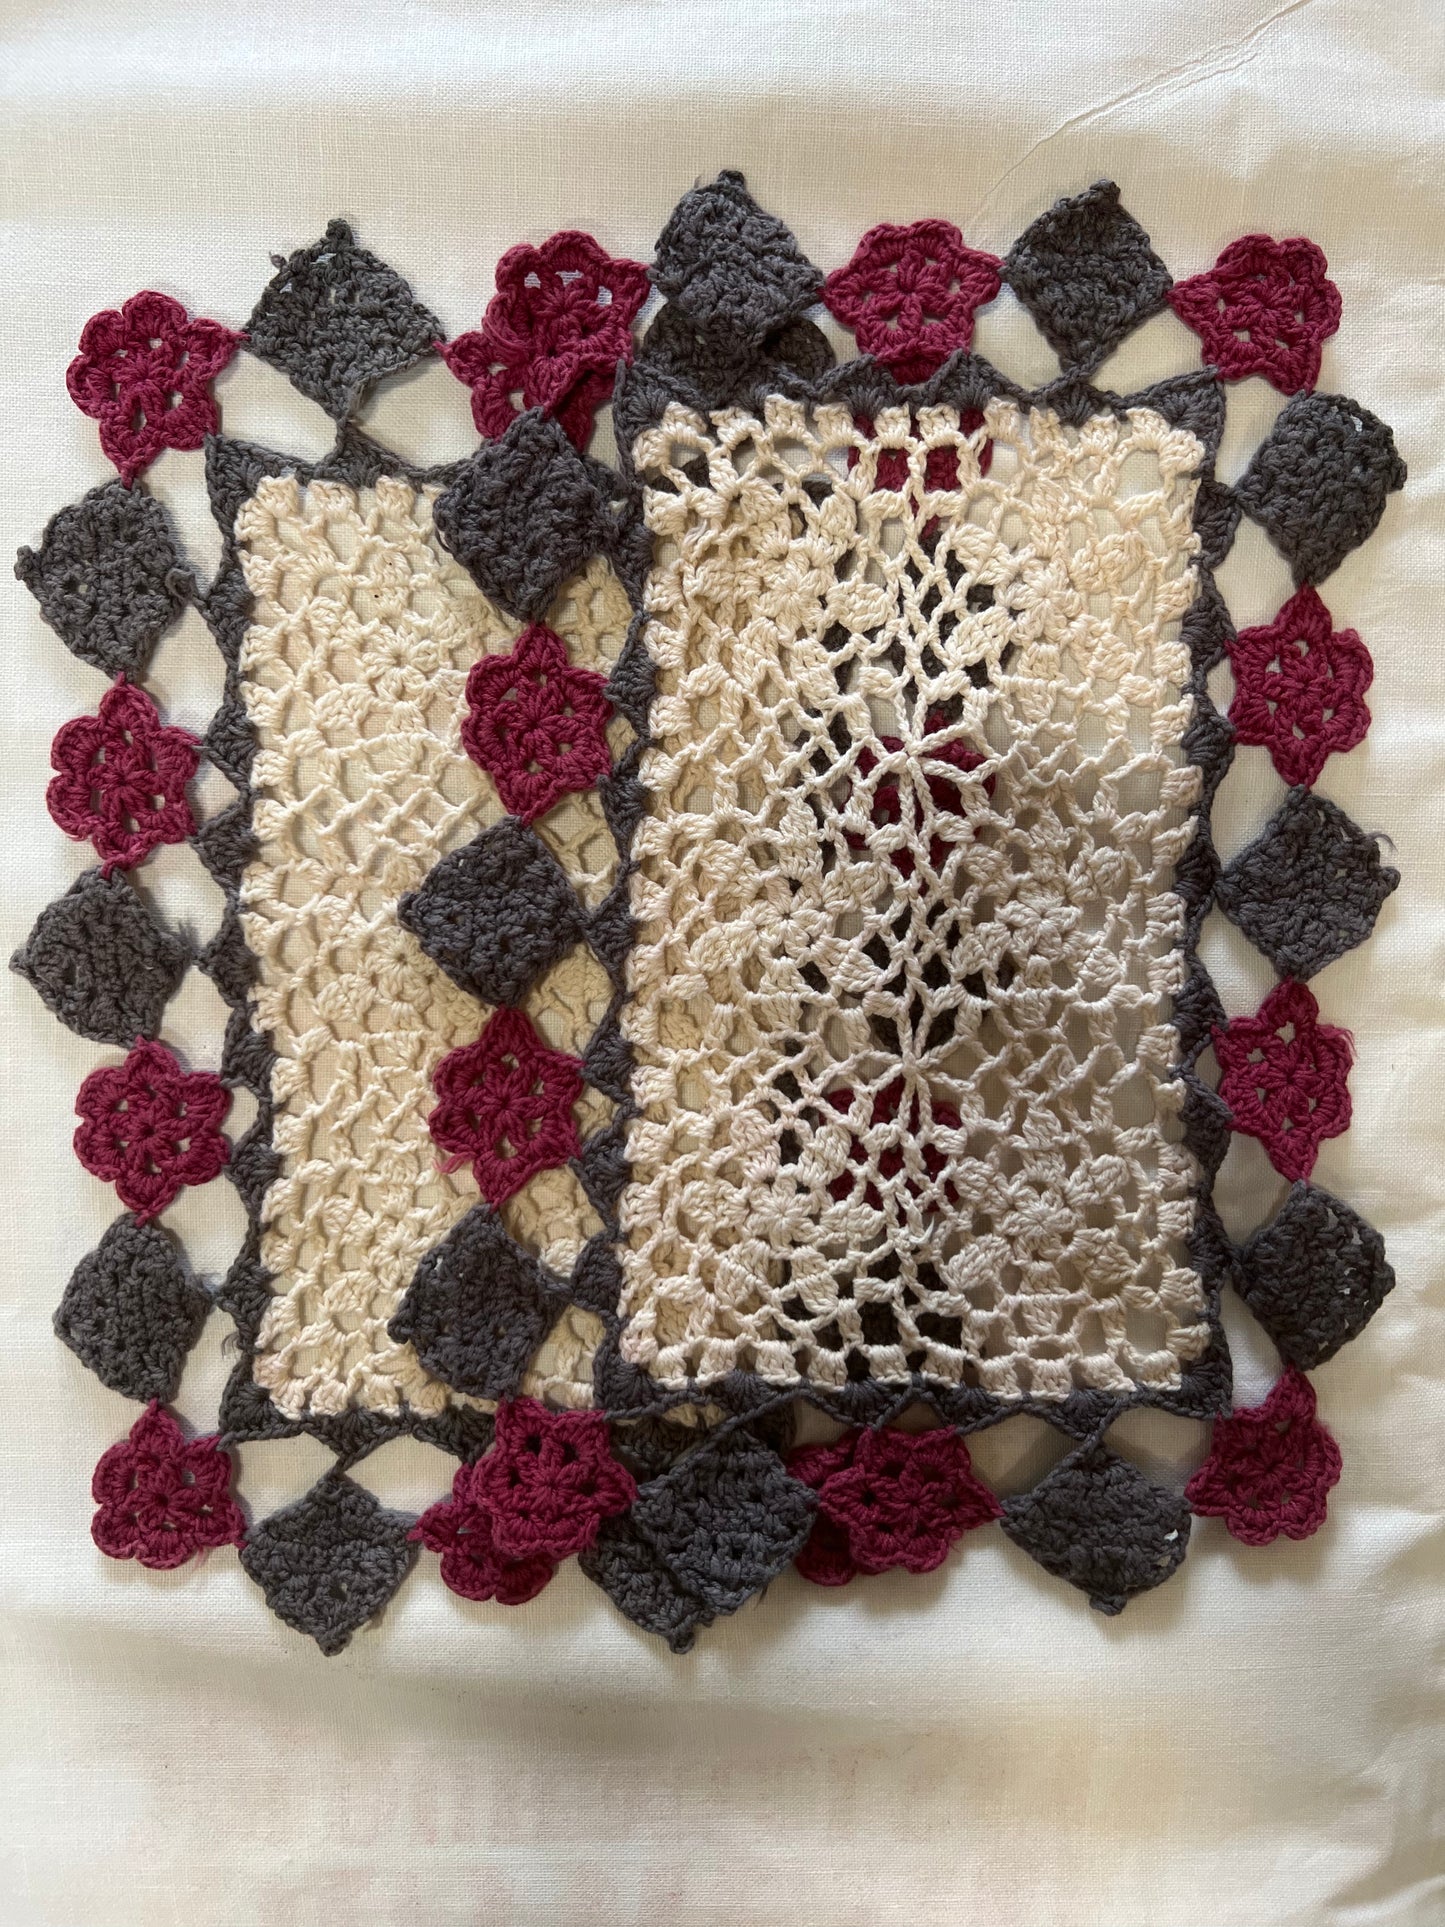 Hand crocheted doilies